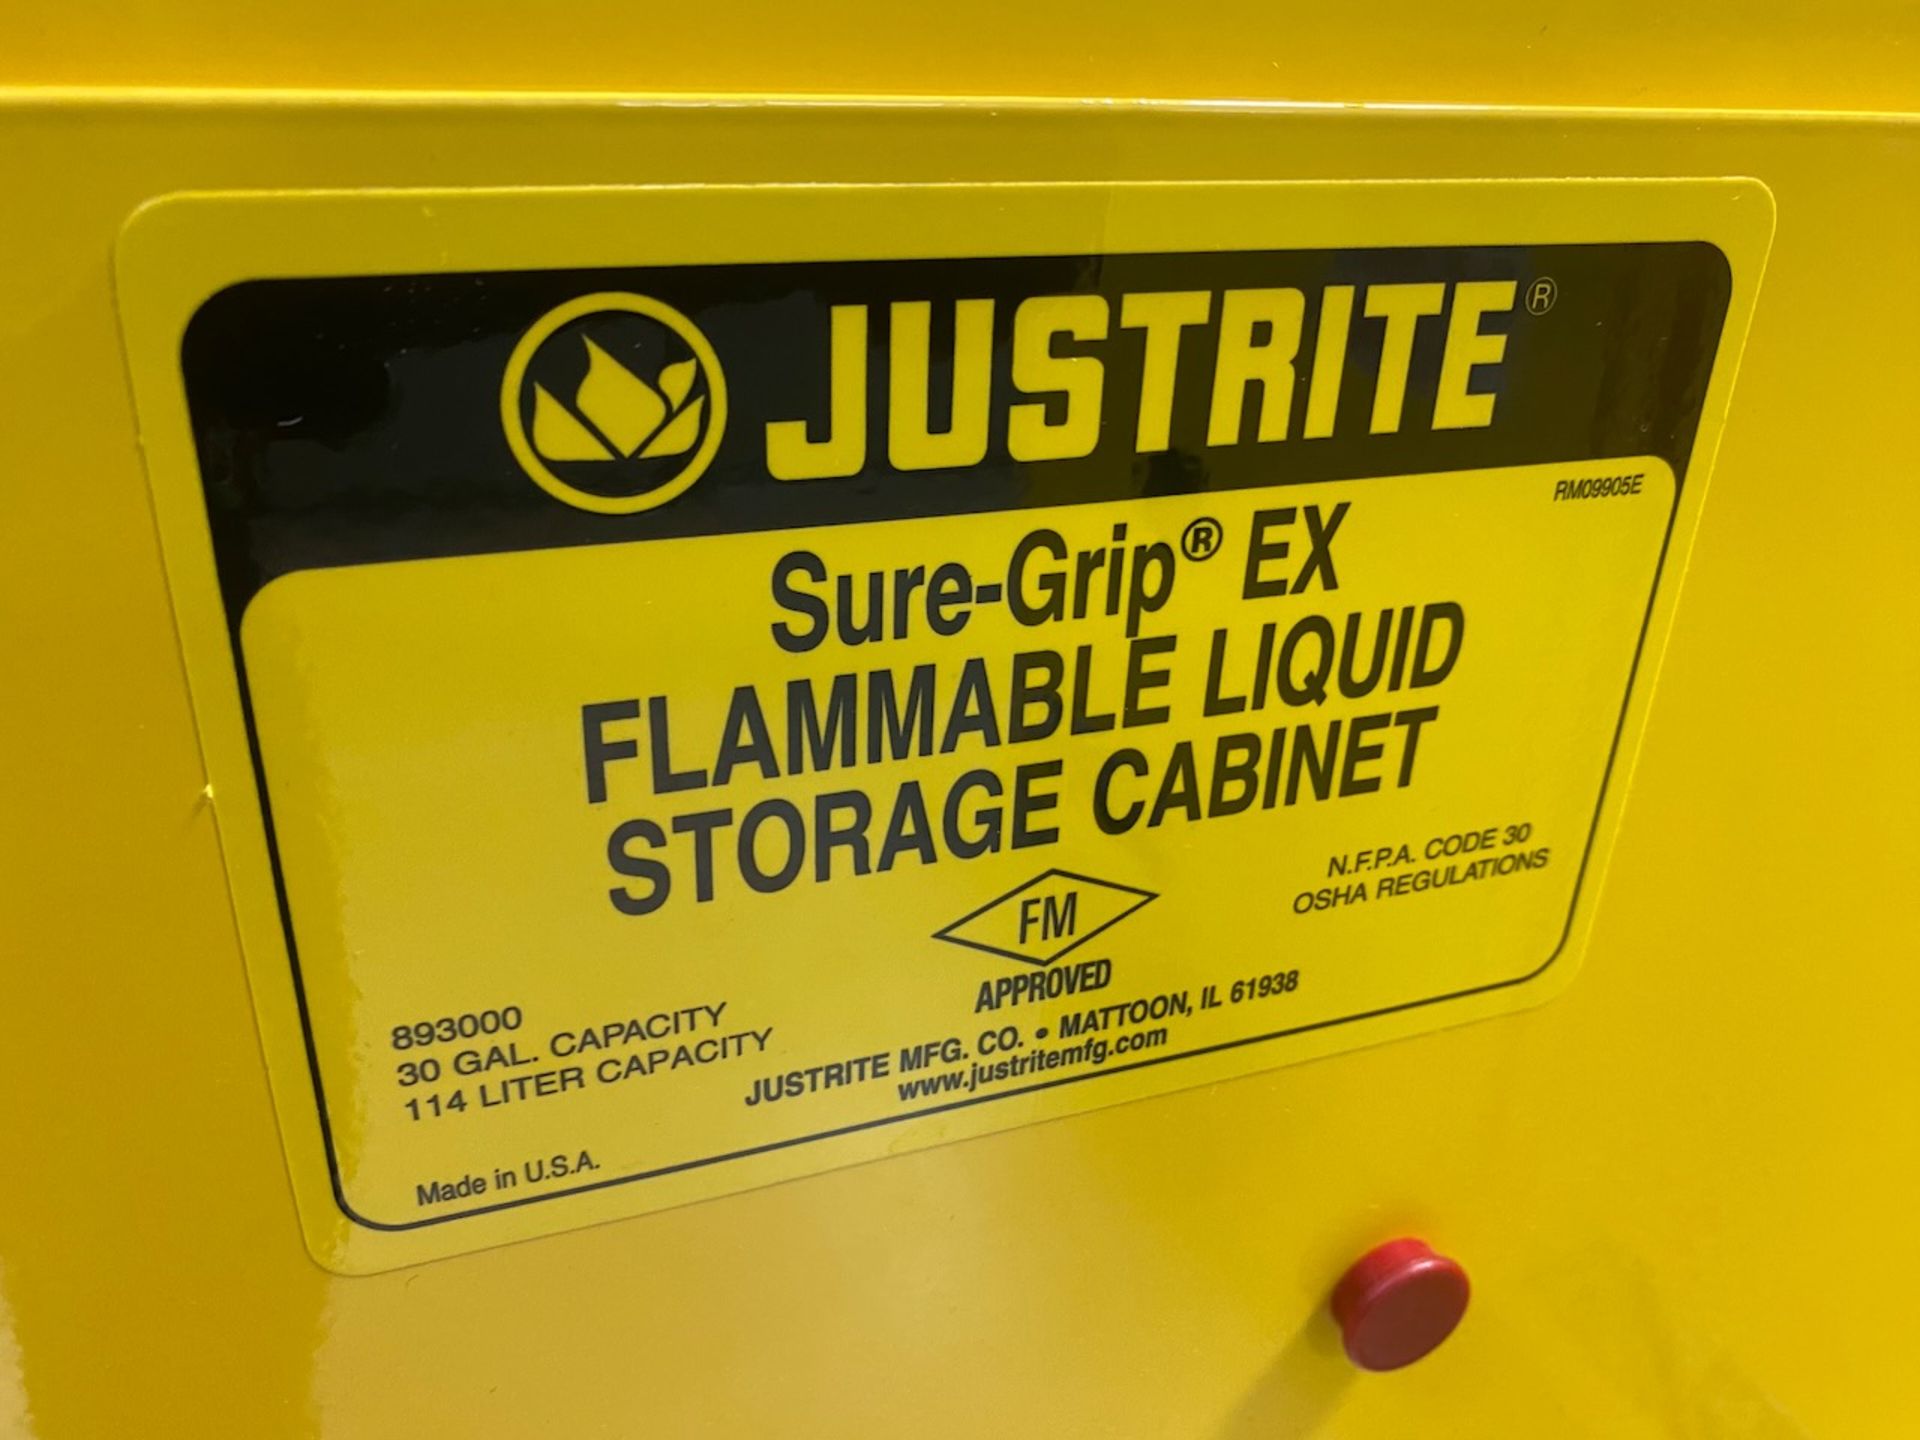 Justrite Flammable Liquid Storage Cabinet - Image 2 of 3